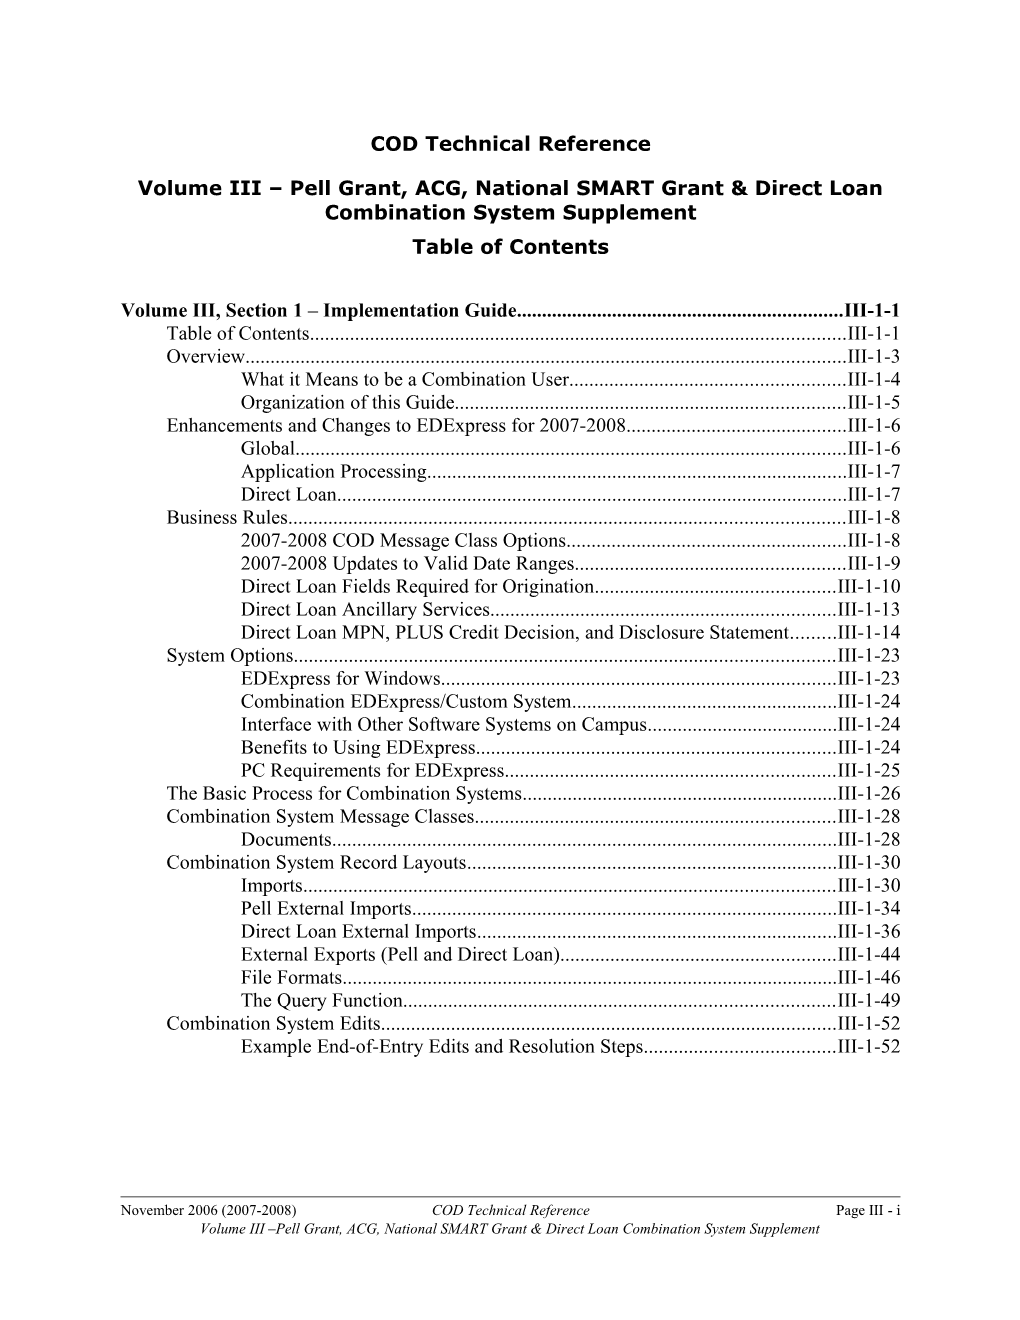 Volume III Pell Grant, ACG, National SMART Grant & Direct Loan